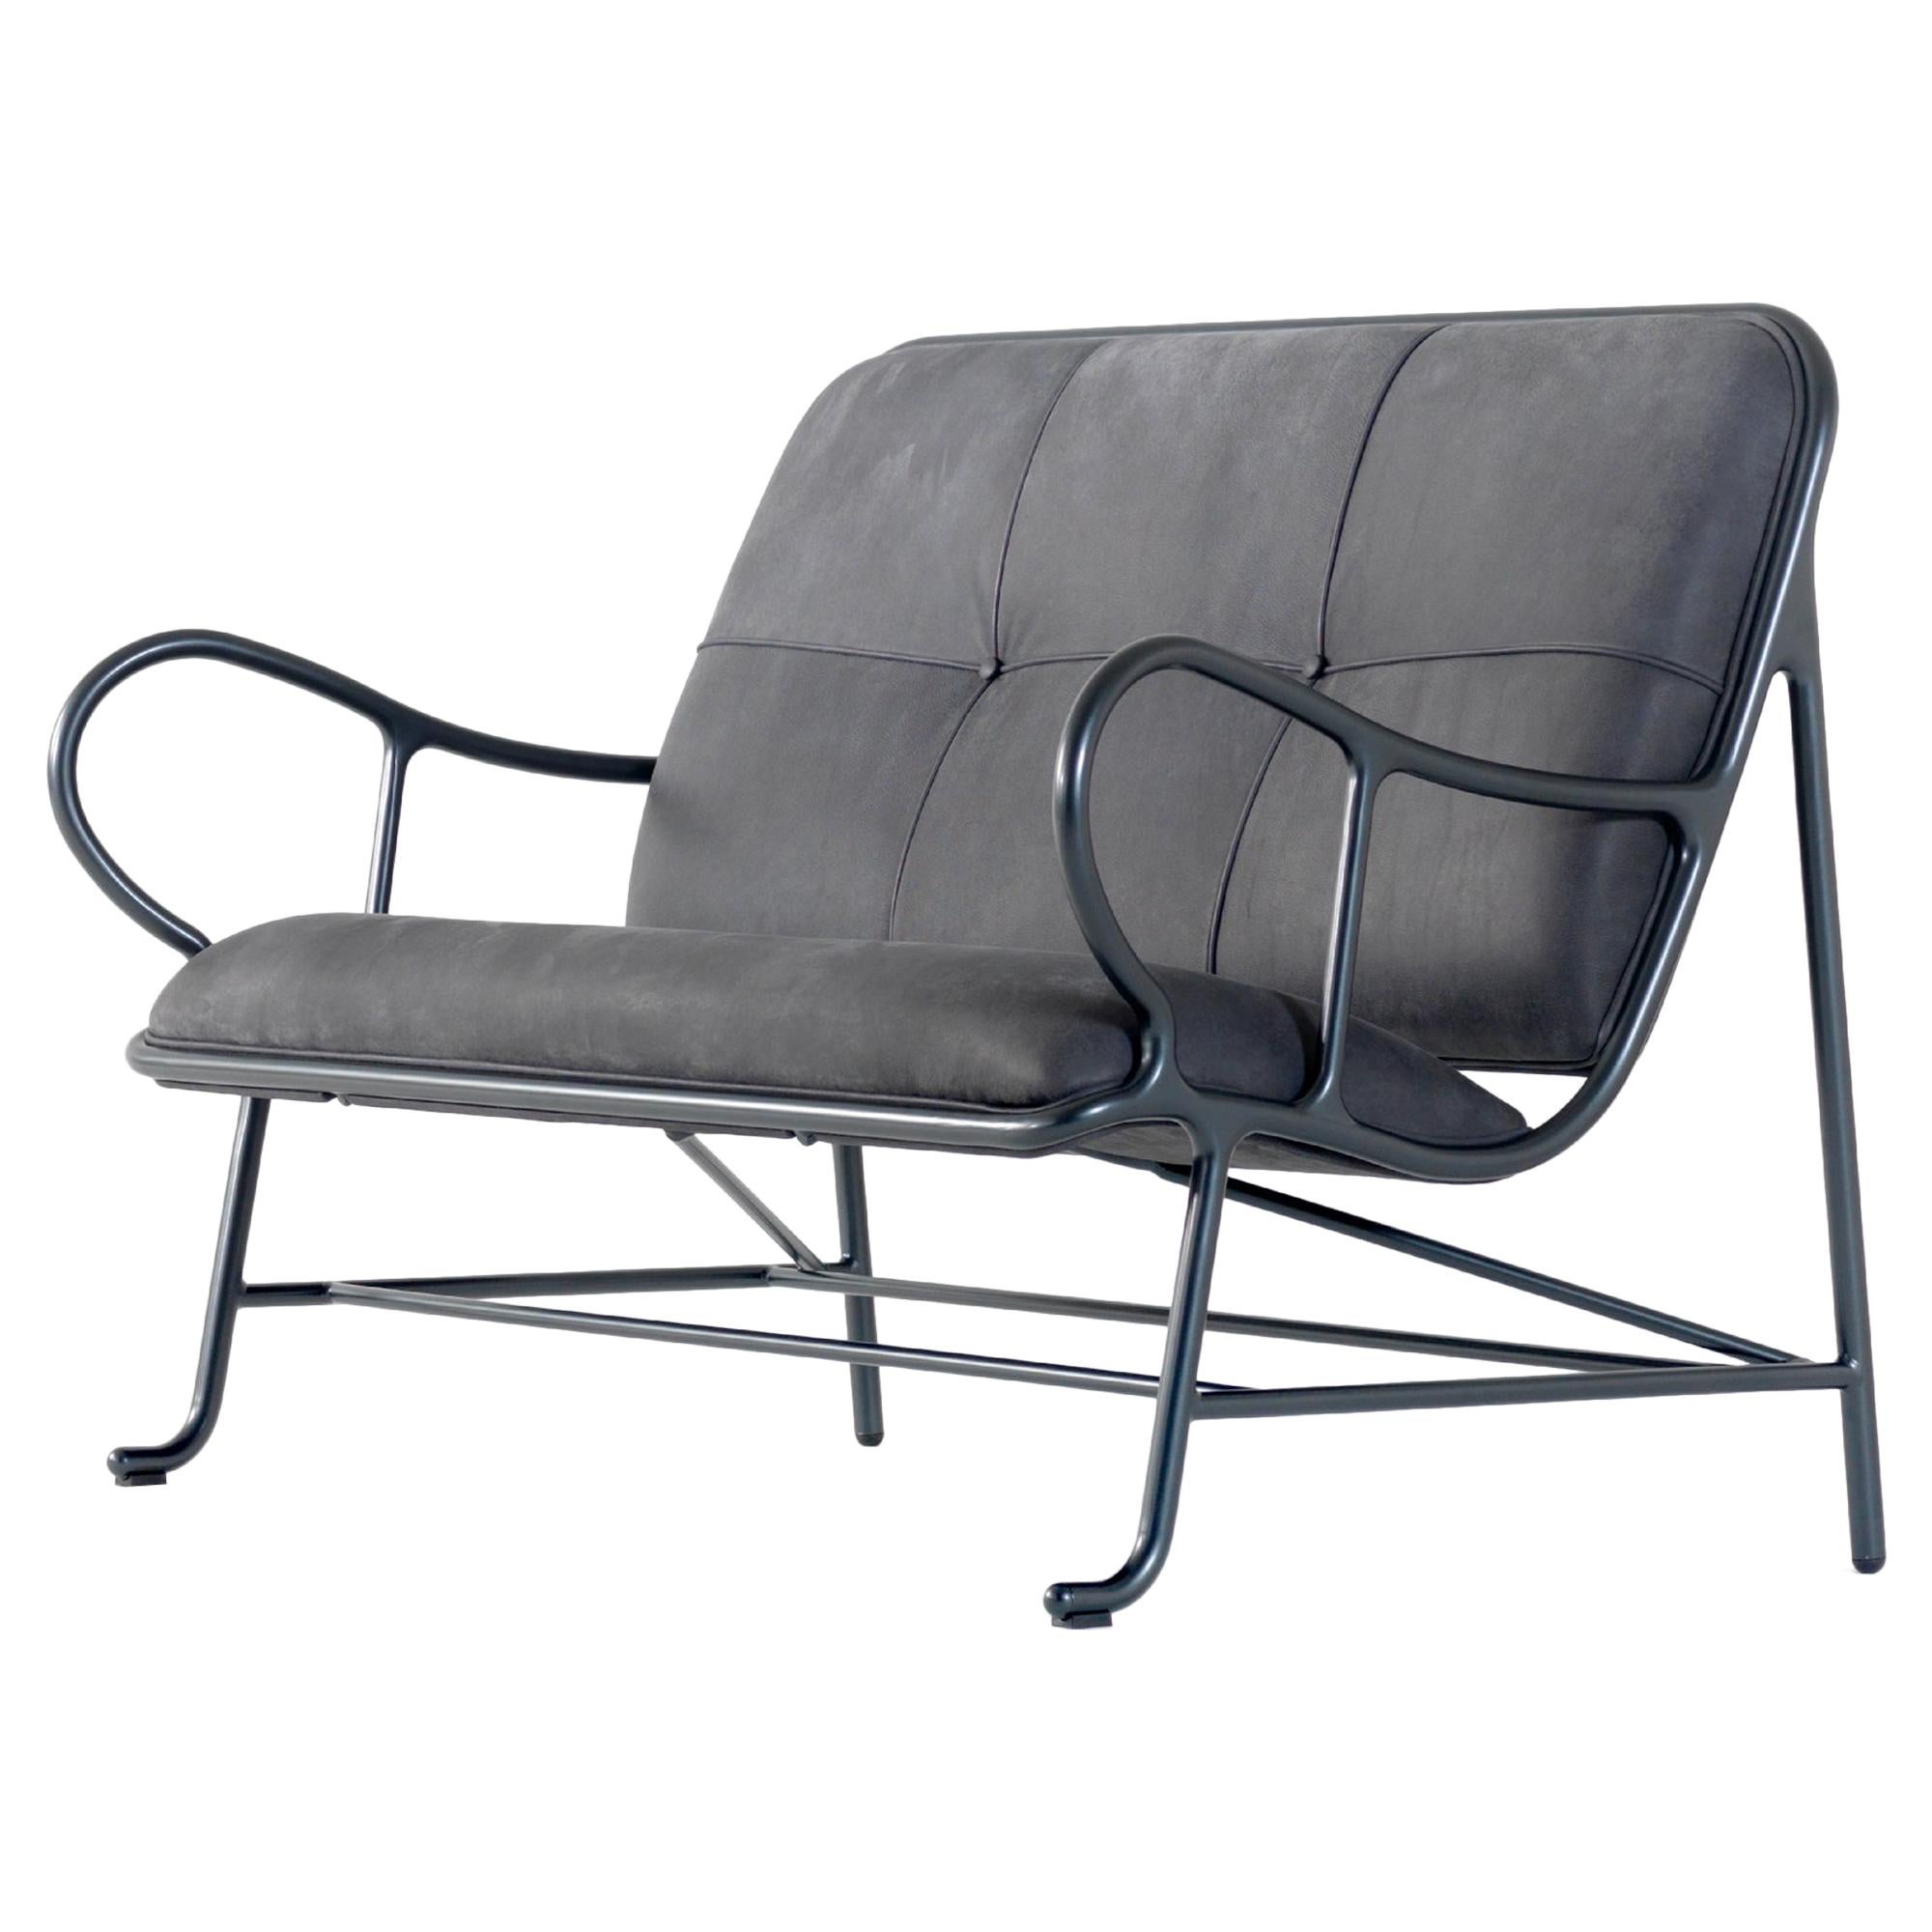 Gardenias sofa bench bt Jaime Hayon, grey fabric, steel structure Spanish design For Sale